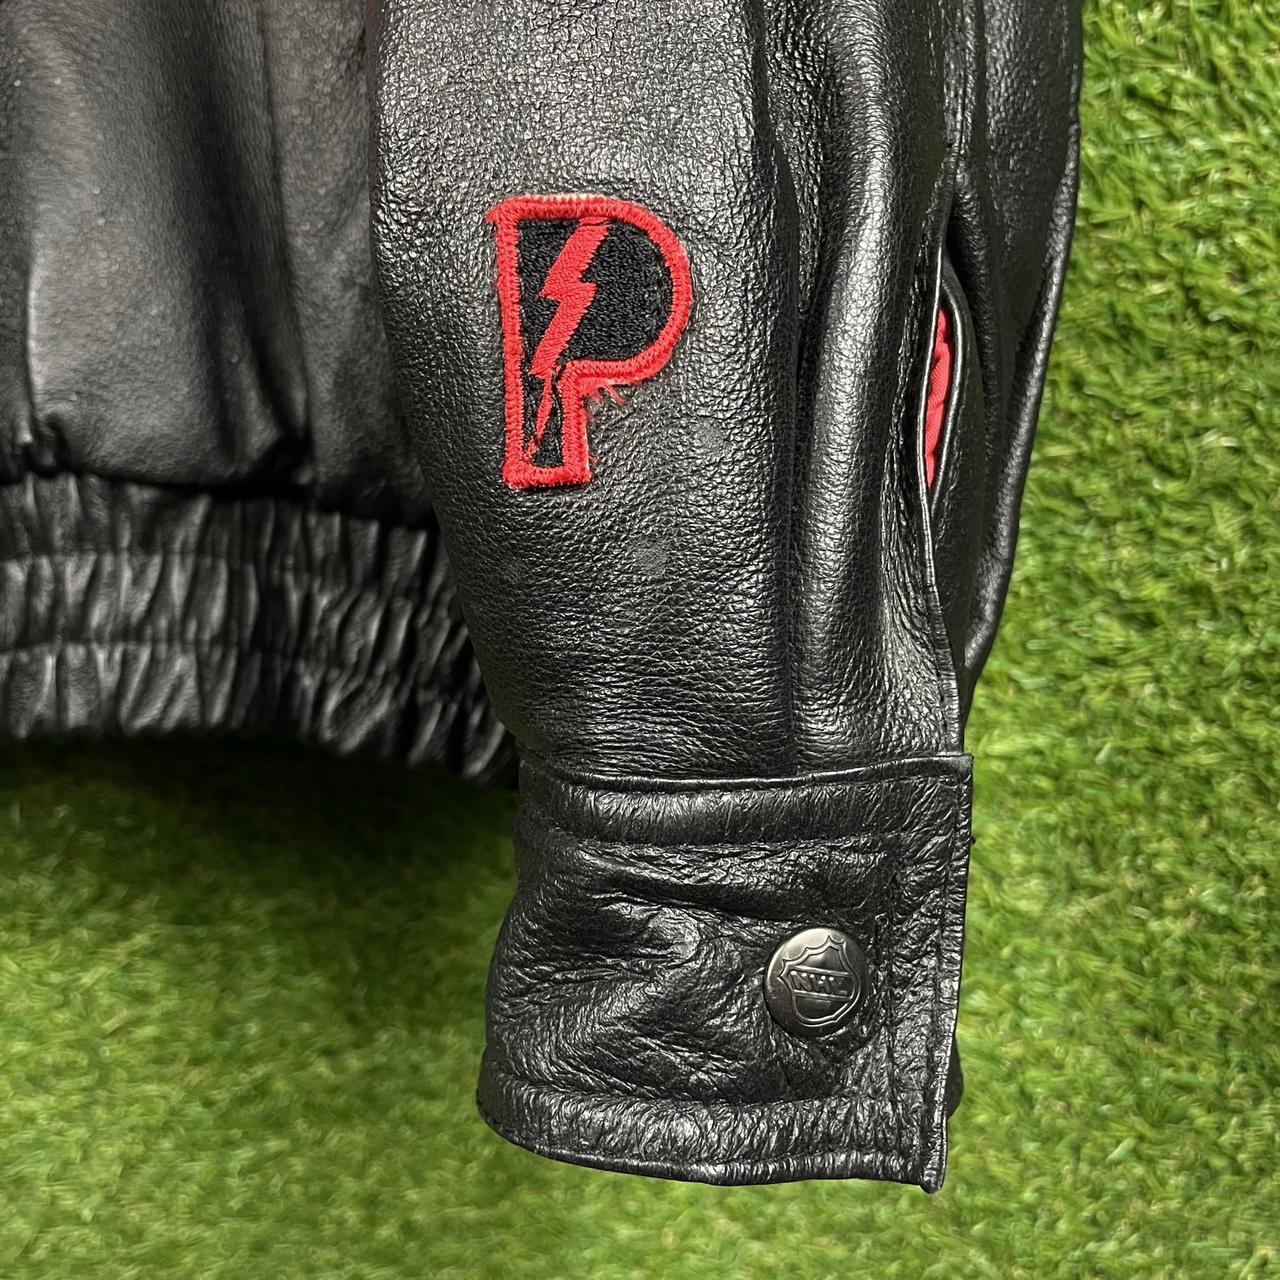 Detroit Red Wings Pro Player Vintage Leather Jacket - Maker of Jacket